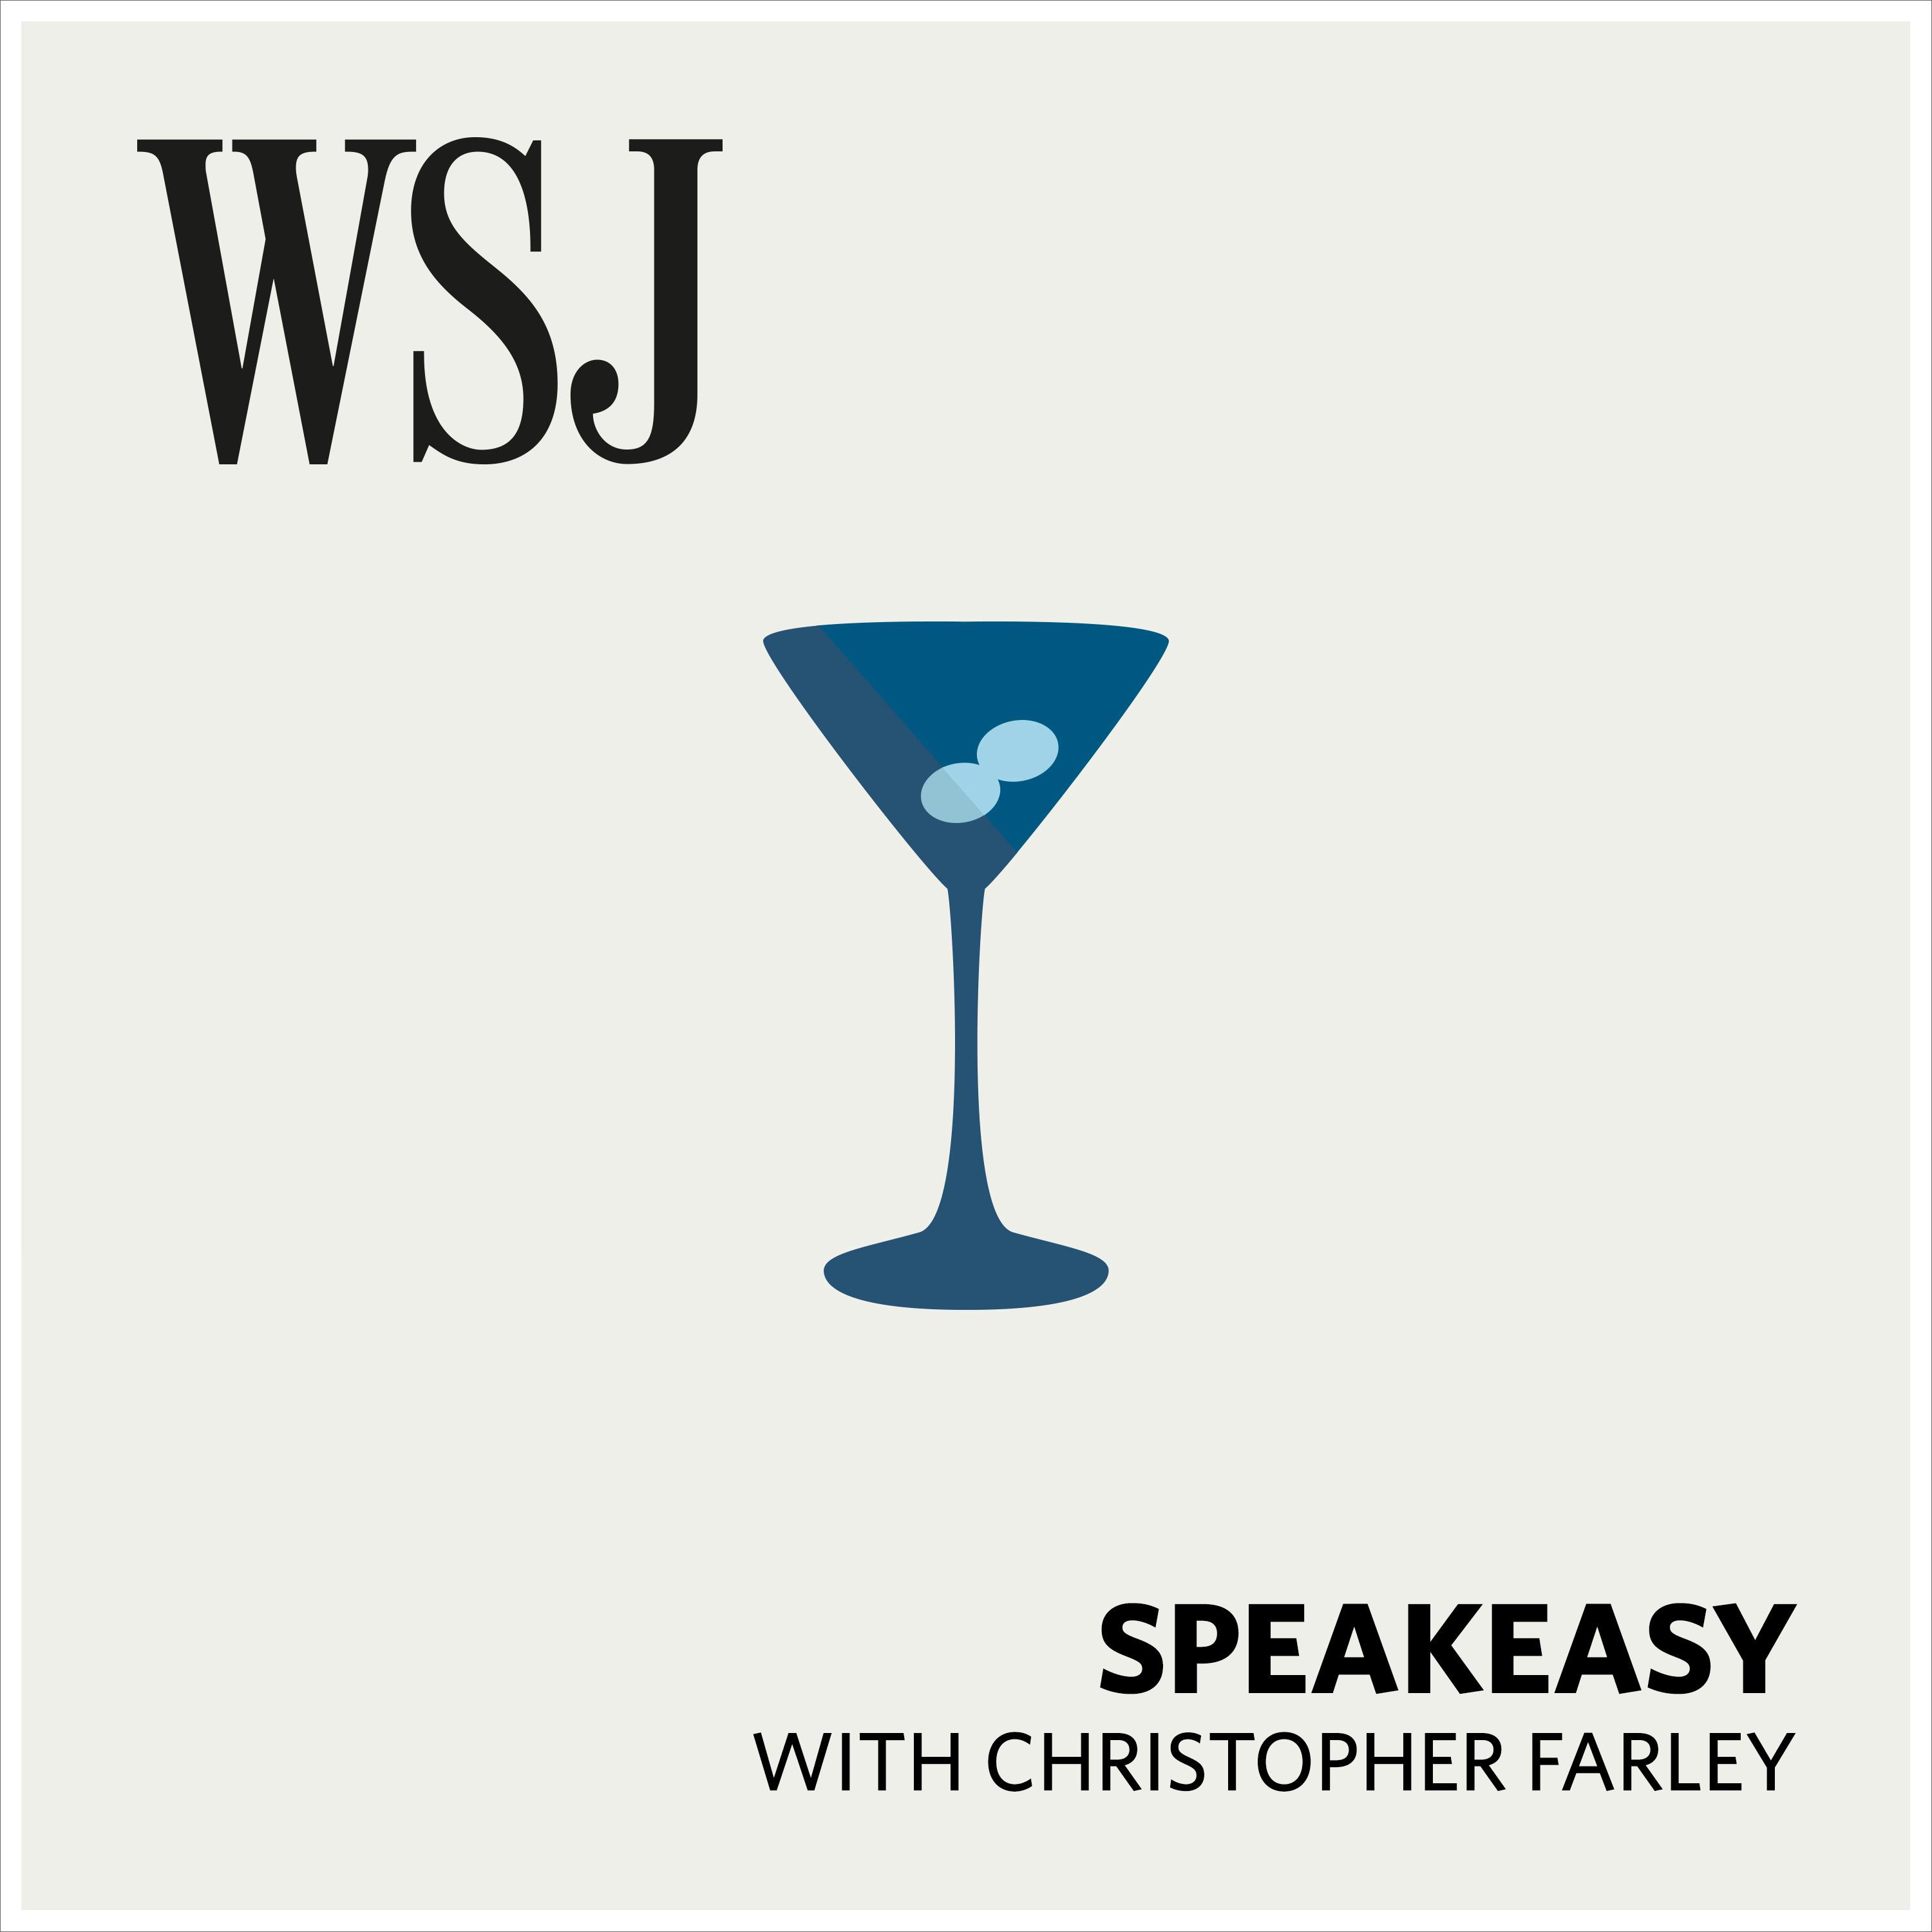 WSJ Speakeasy:Christopher Farley, The Wall Street Journal